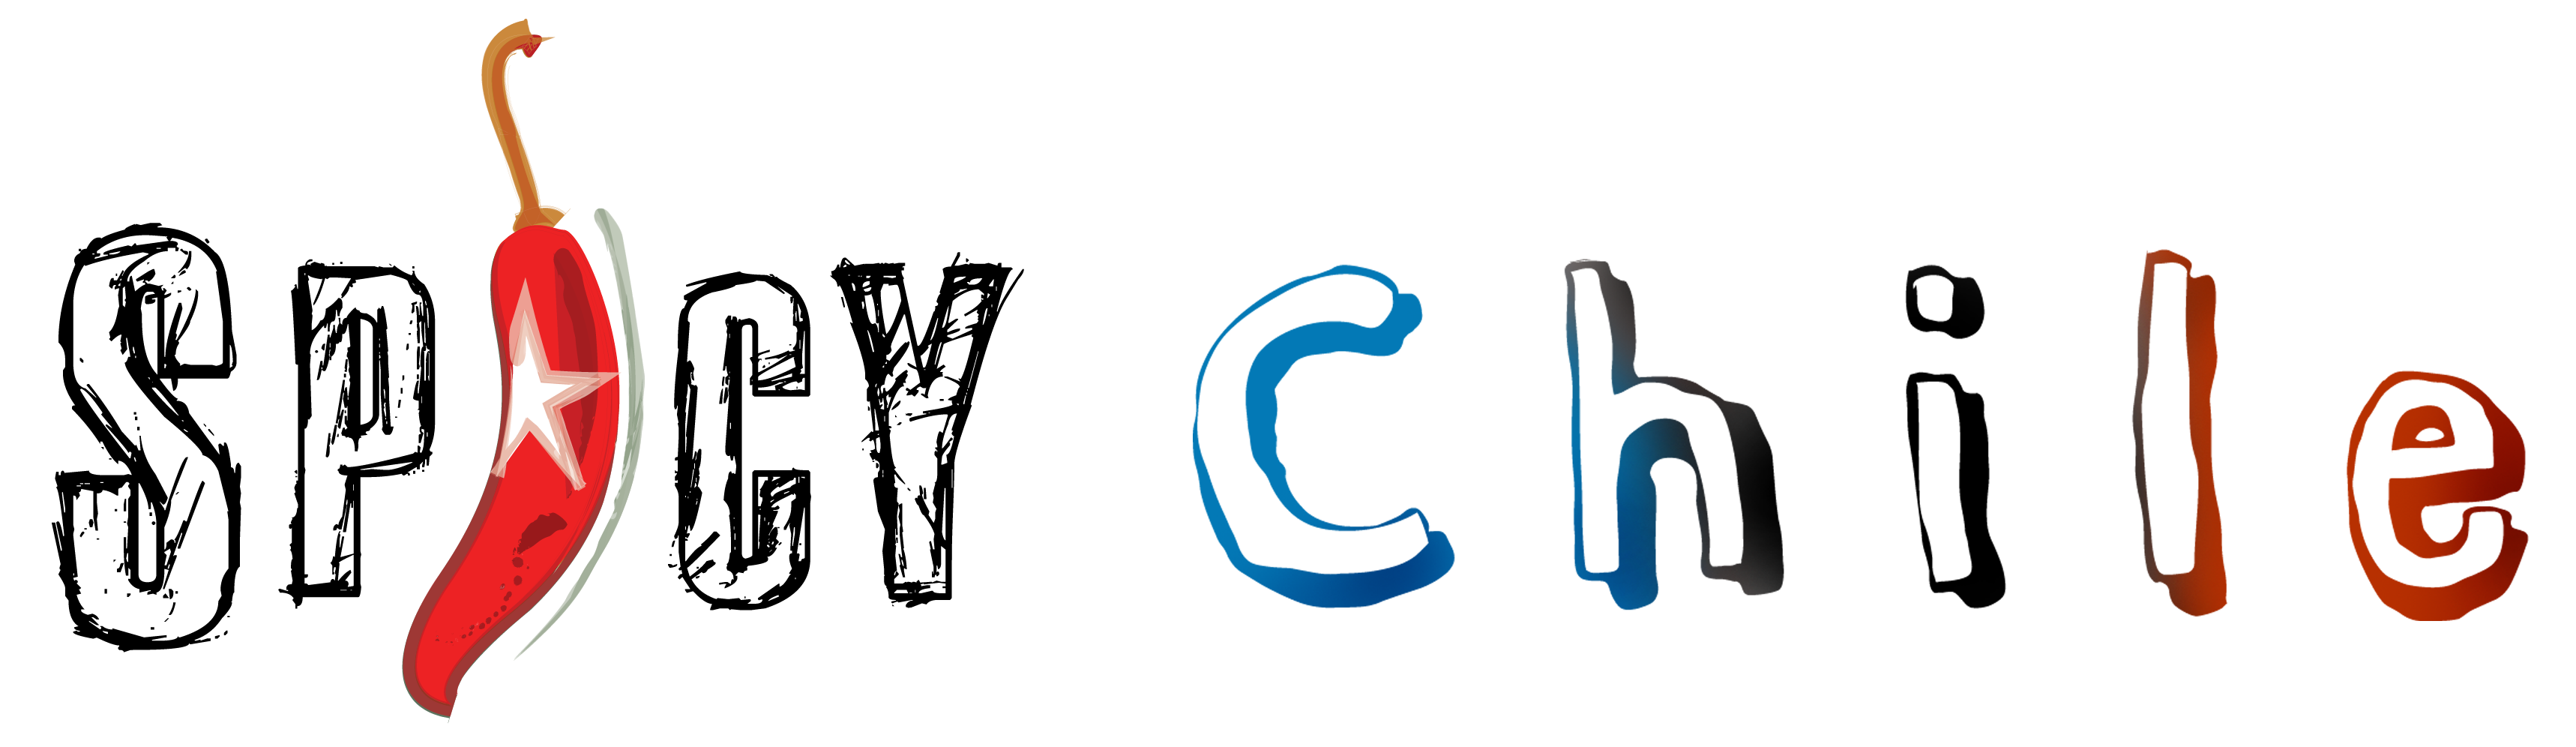 clipart walking logo